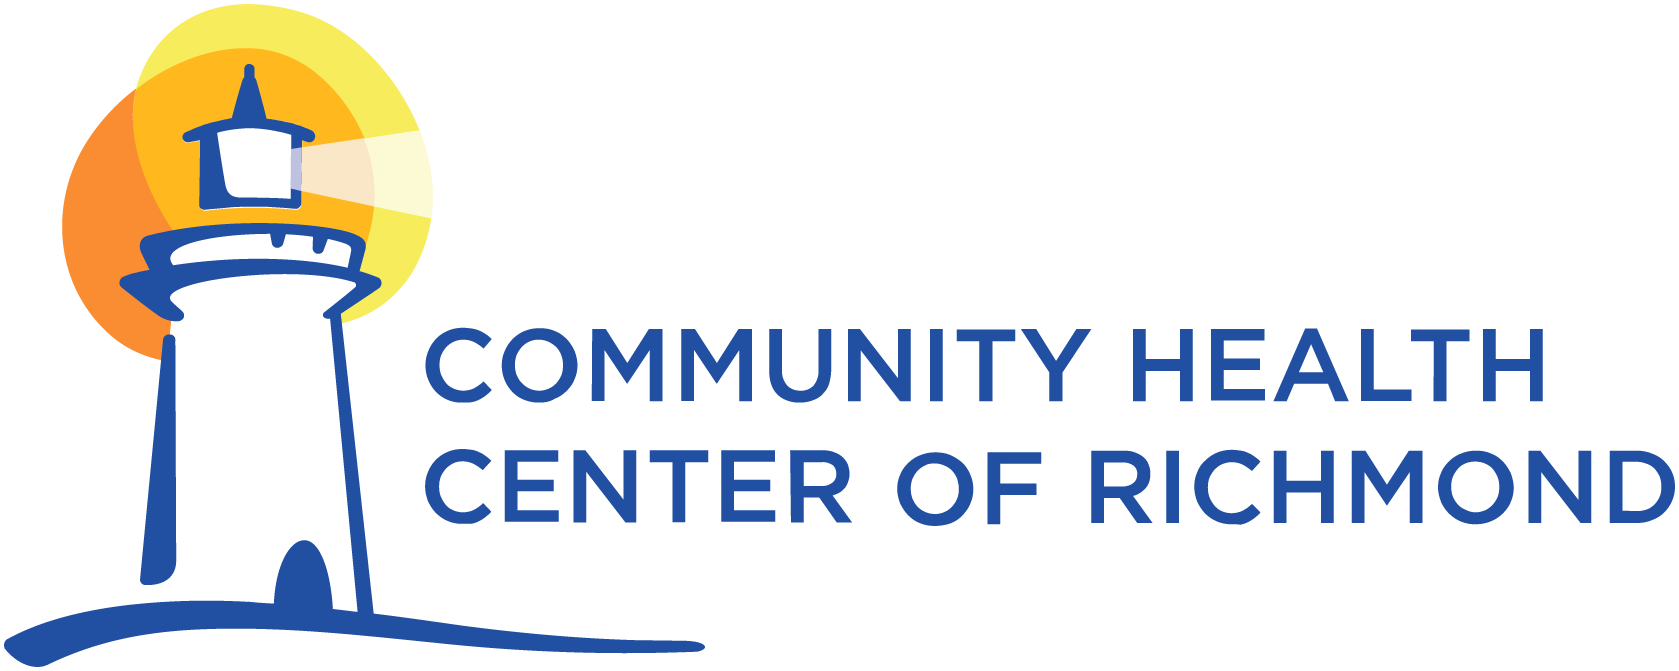 Community Health Center of Richmond 